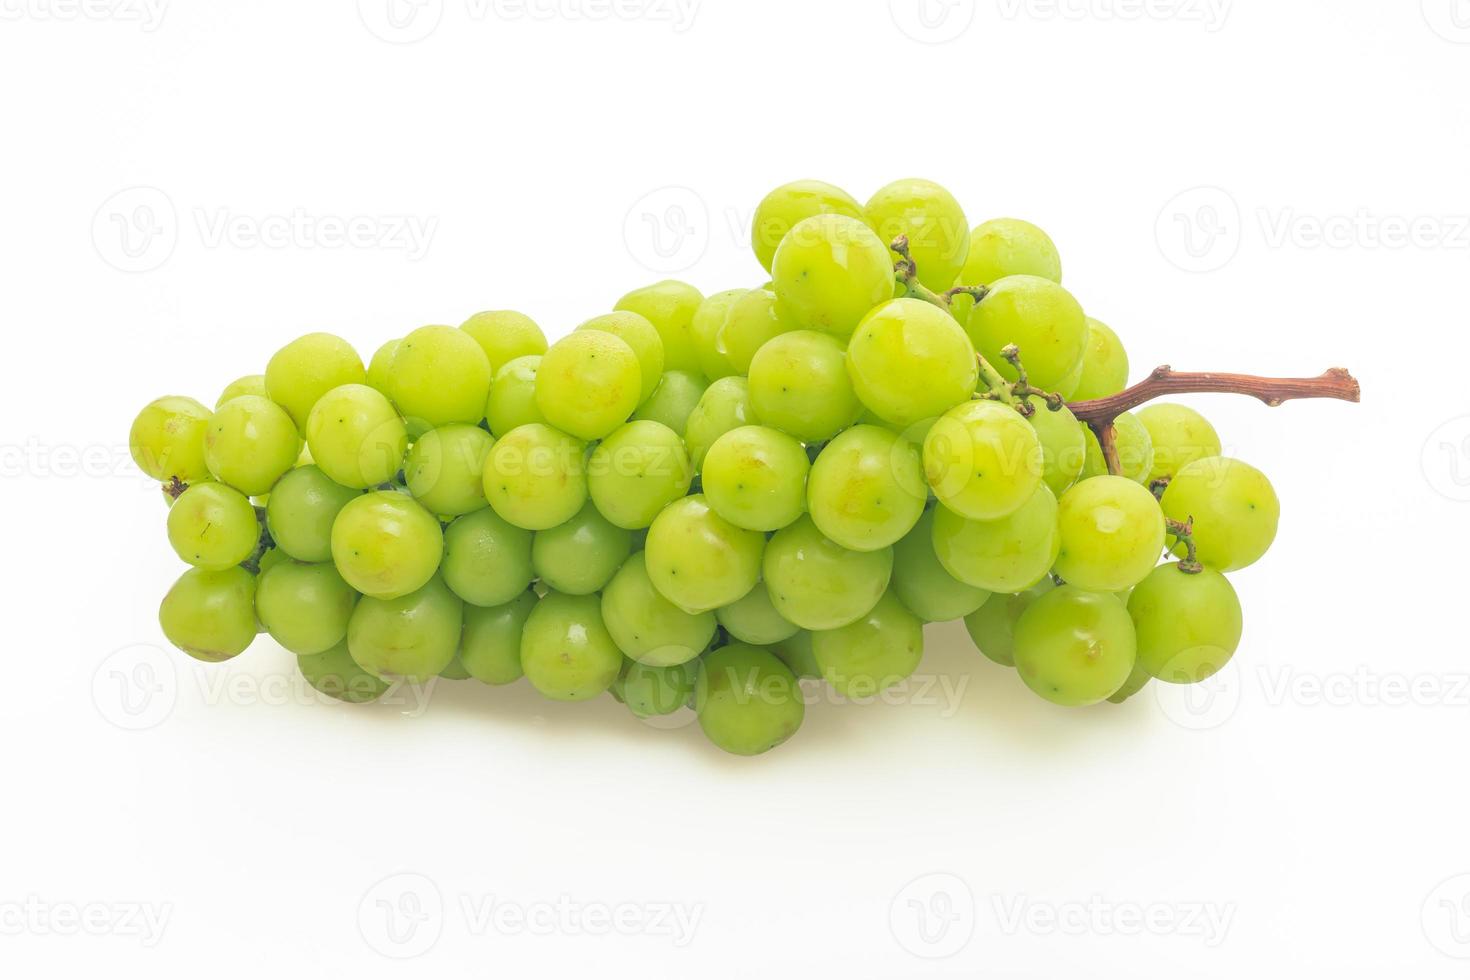 uva verde fresca su sfondo bianco foto